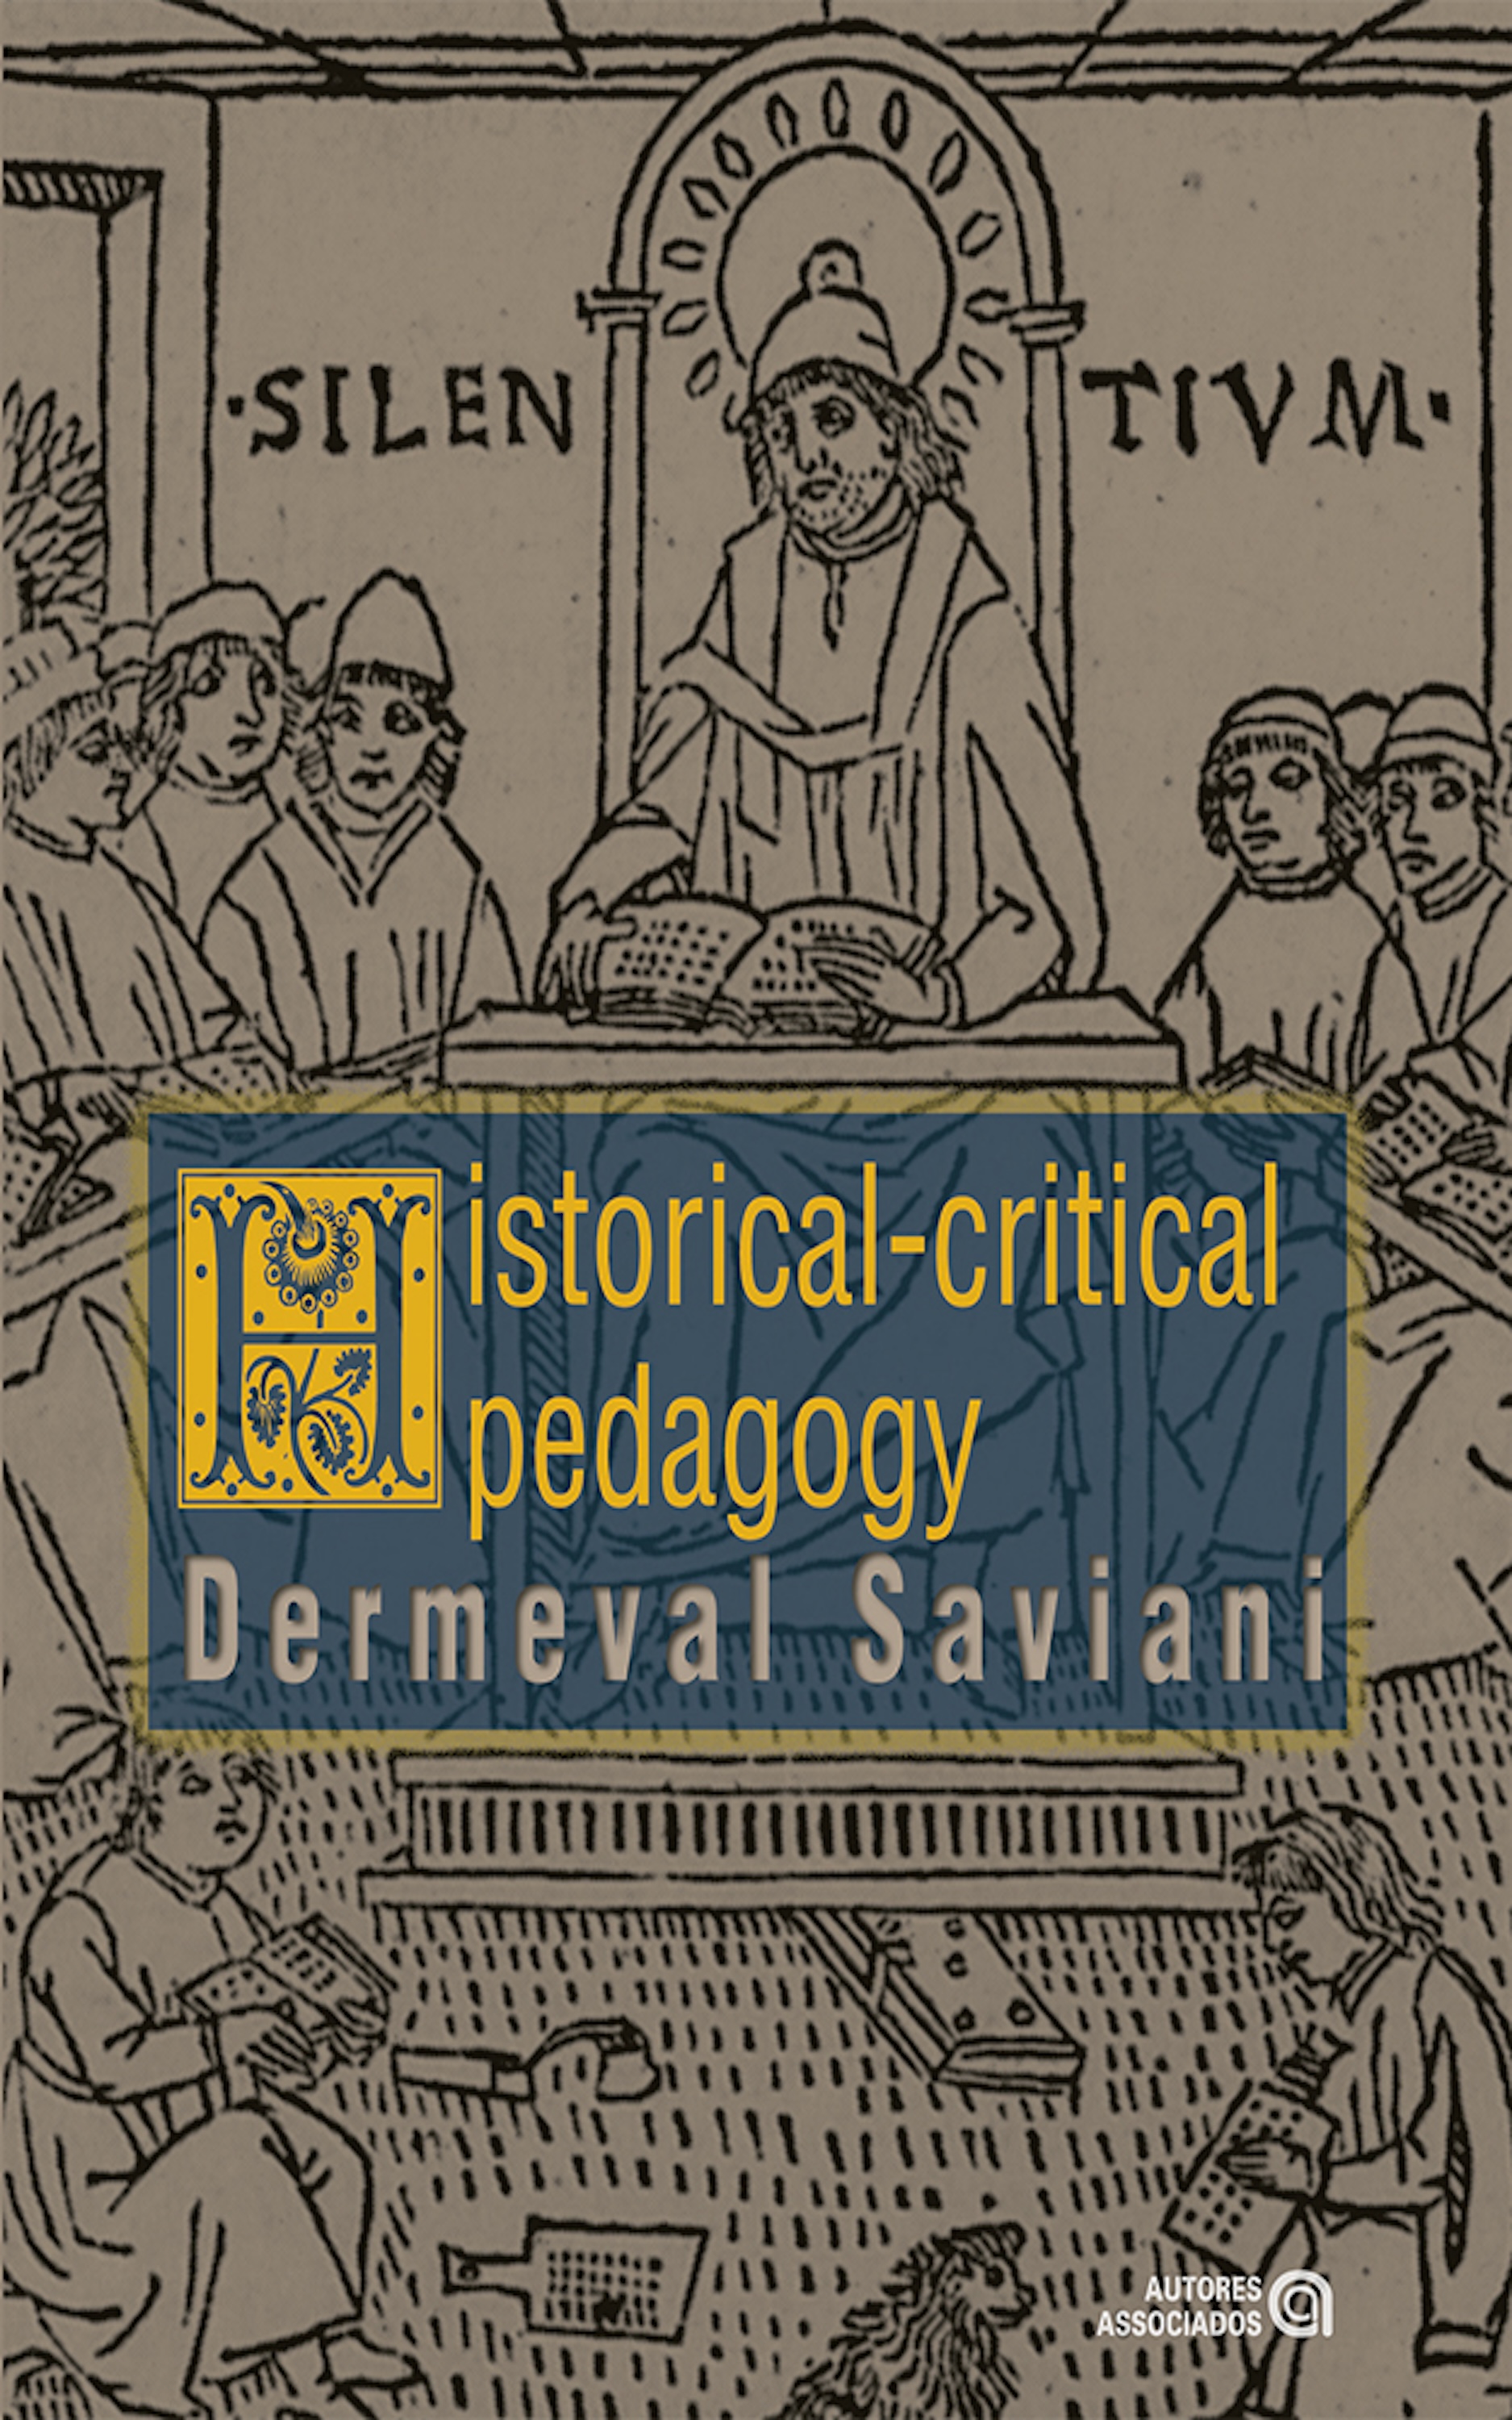 Historical-critical pedagogy